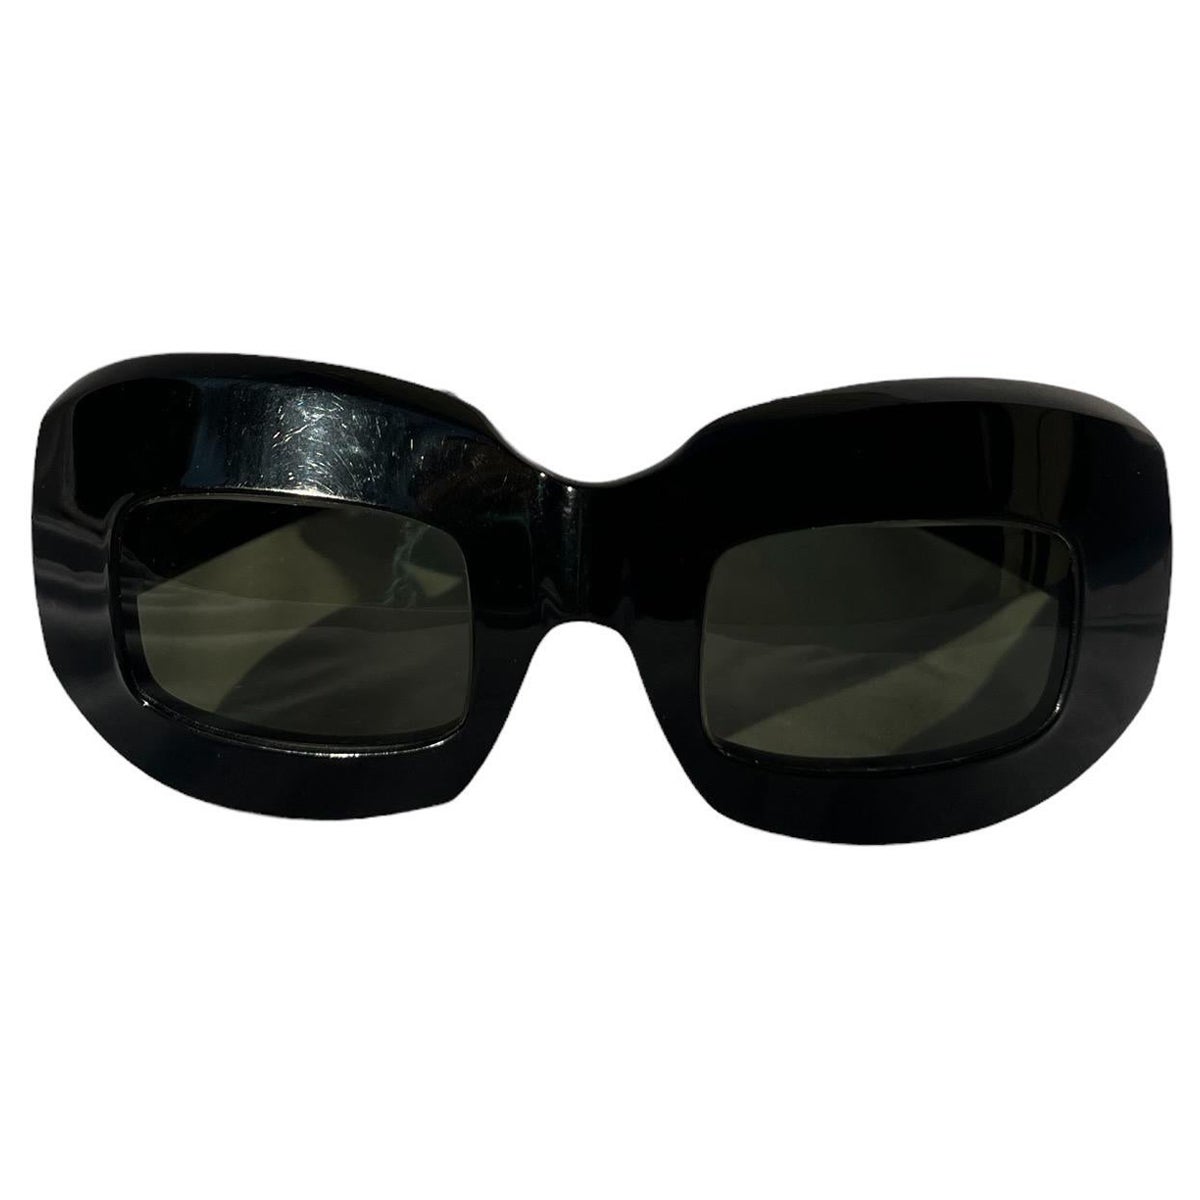 Avant Garde Hole Punch Cut Out Rectangle Sunglasses White Black